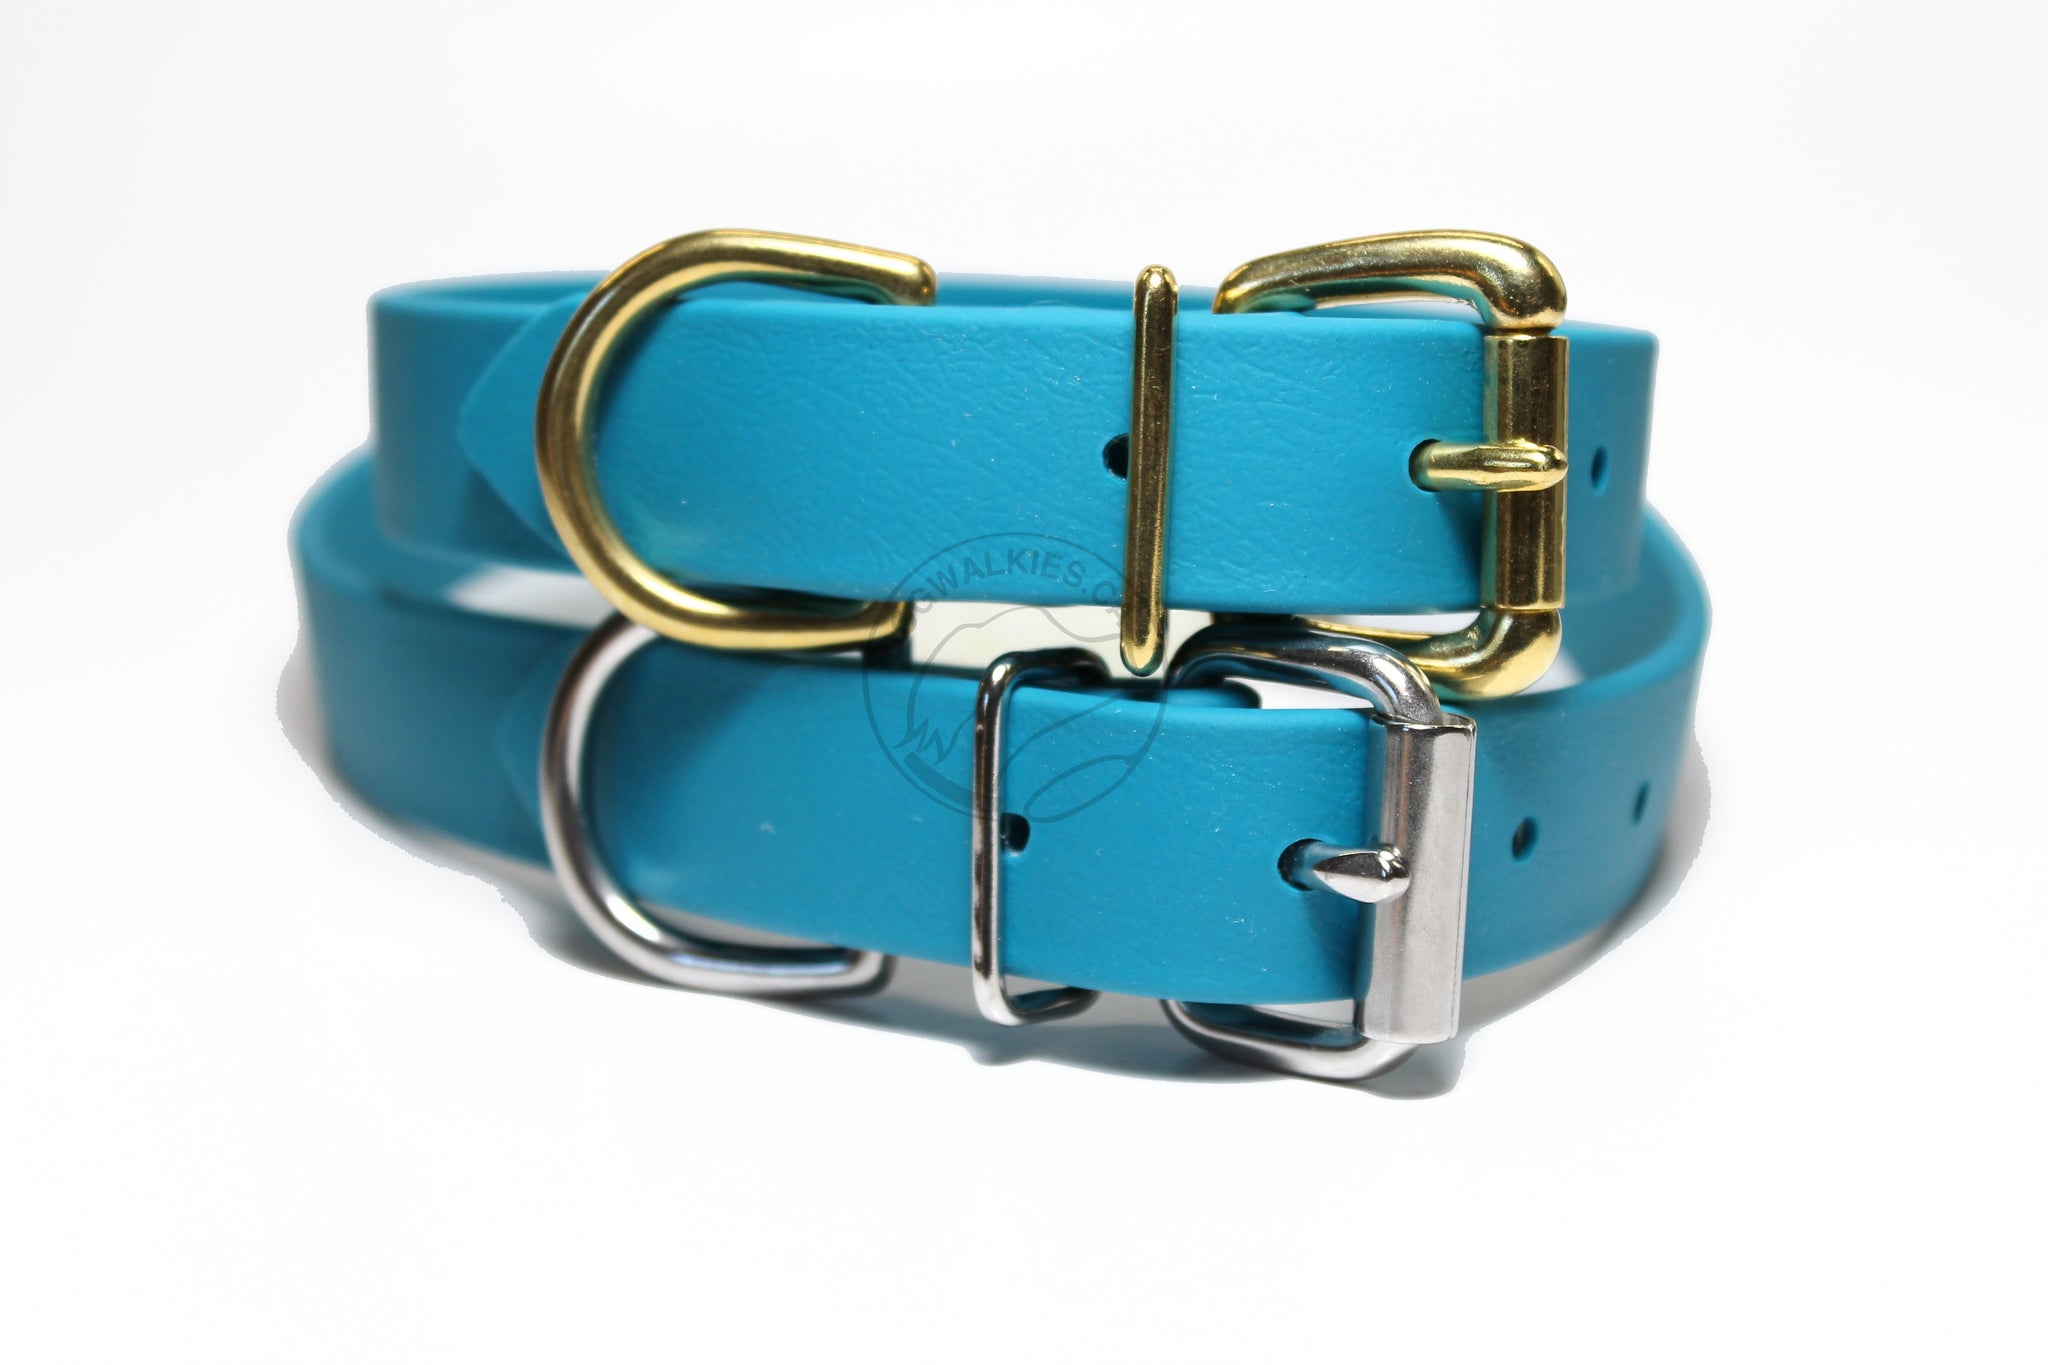 Oasis Blue Biothane Dog Collar - 1 inch (25mm) wide